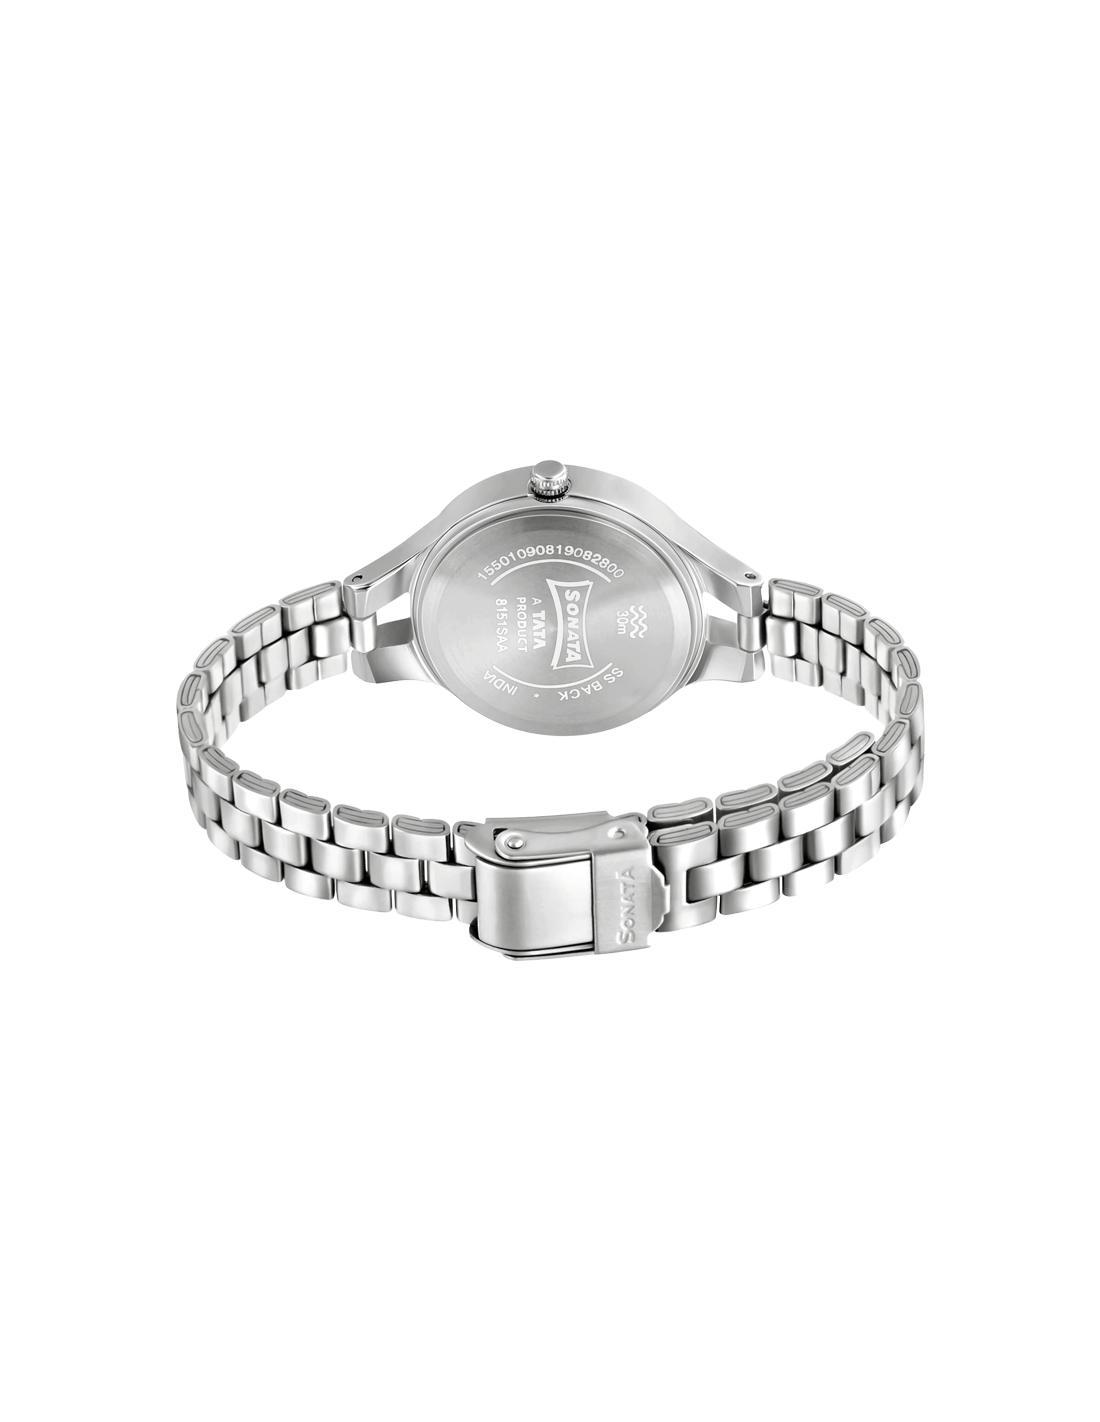 Sonata Analog Gold Dial Unisex's Watch-NL70808069YM01/NP70808069YM01 |  Analog watch, Unisex watches, Contemporary watches